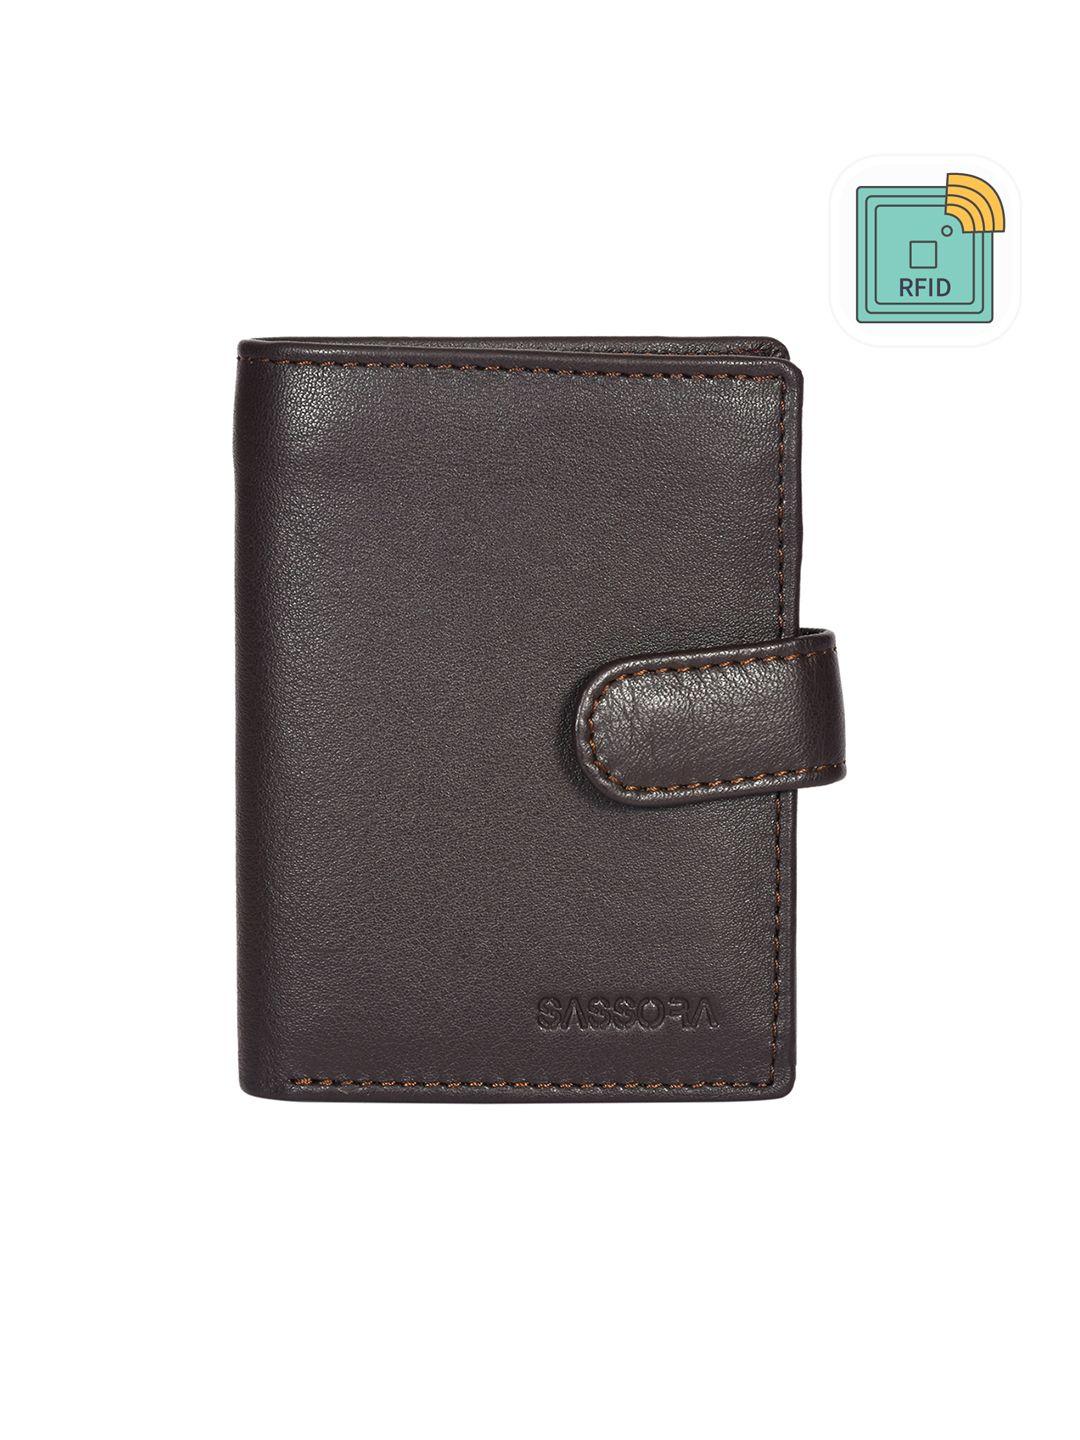 sassora unisex textured leather two fold wallet